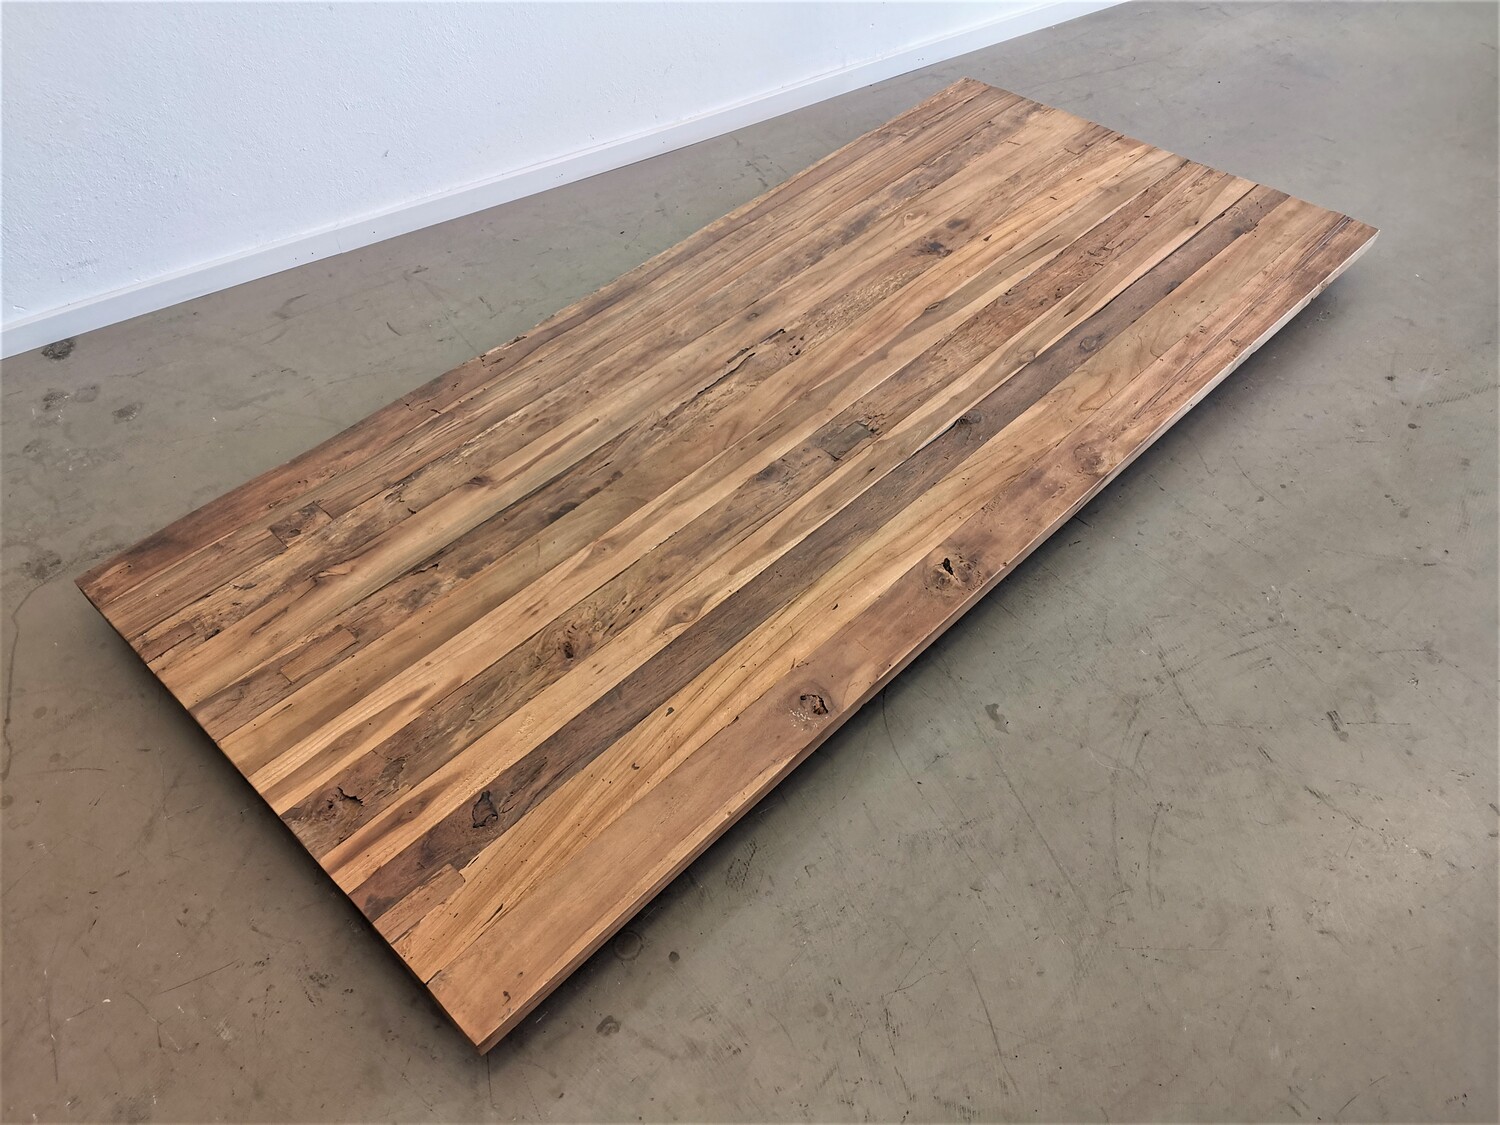 Teak Altholz Tischgestelle – – – Tischplatte – Tischplatten Maßmöbel Möbel Sideboards – Massivholz – Baumplatten